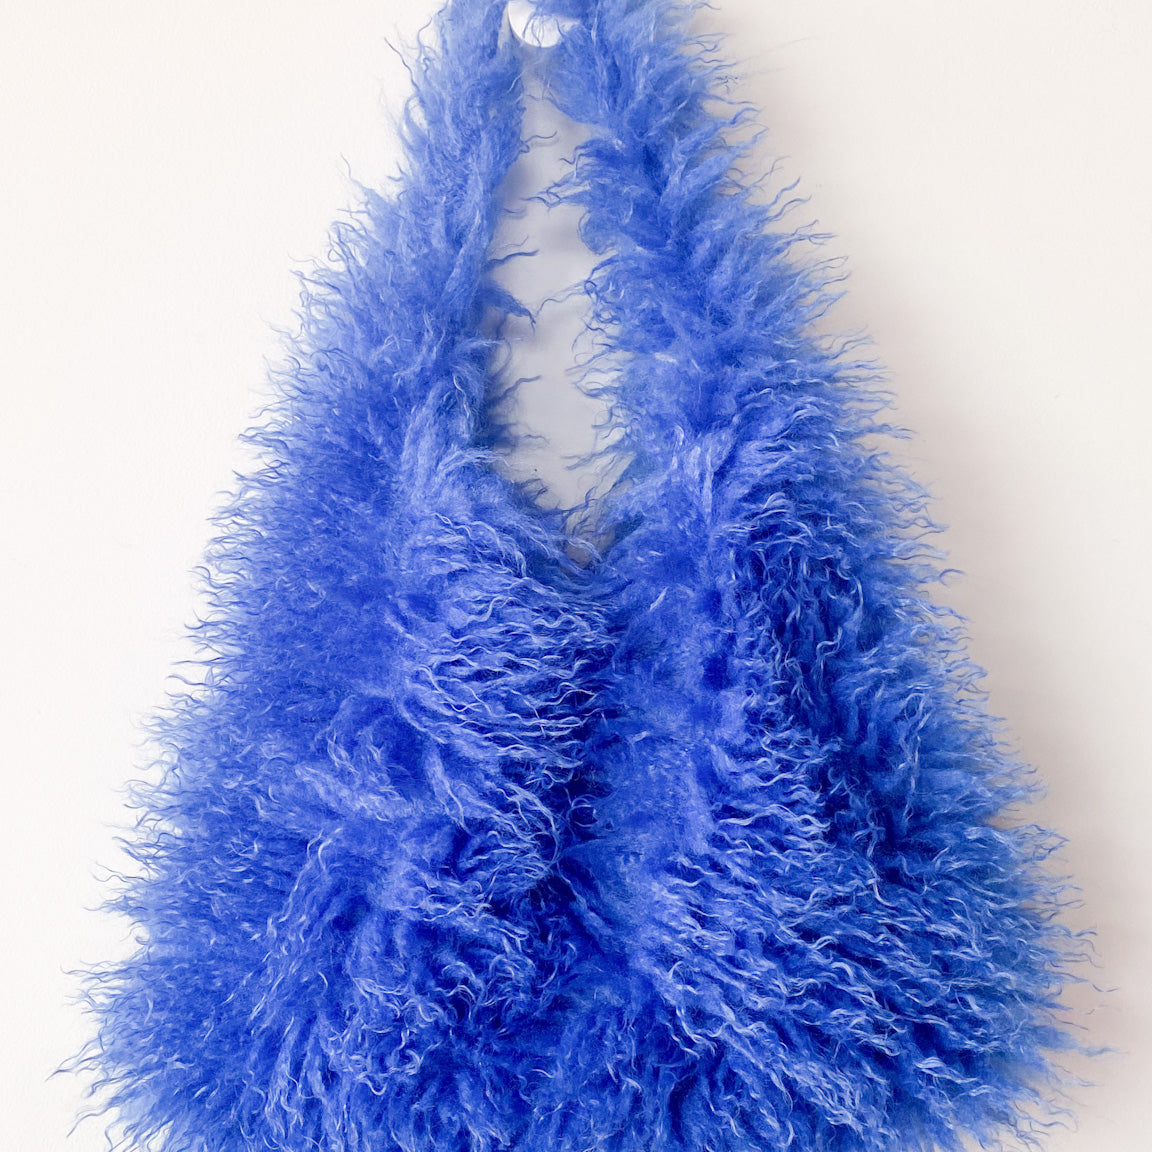 Modern Fuzzy Tote Bag